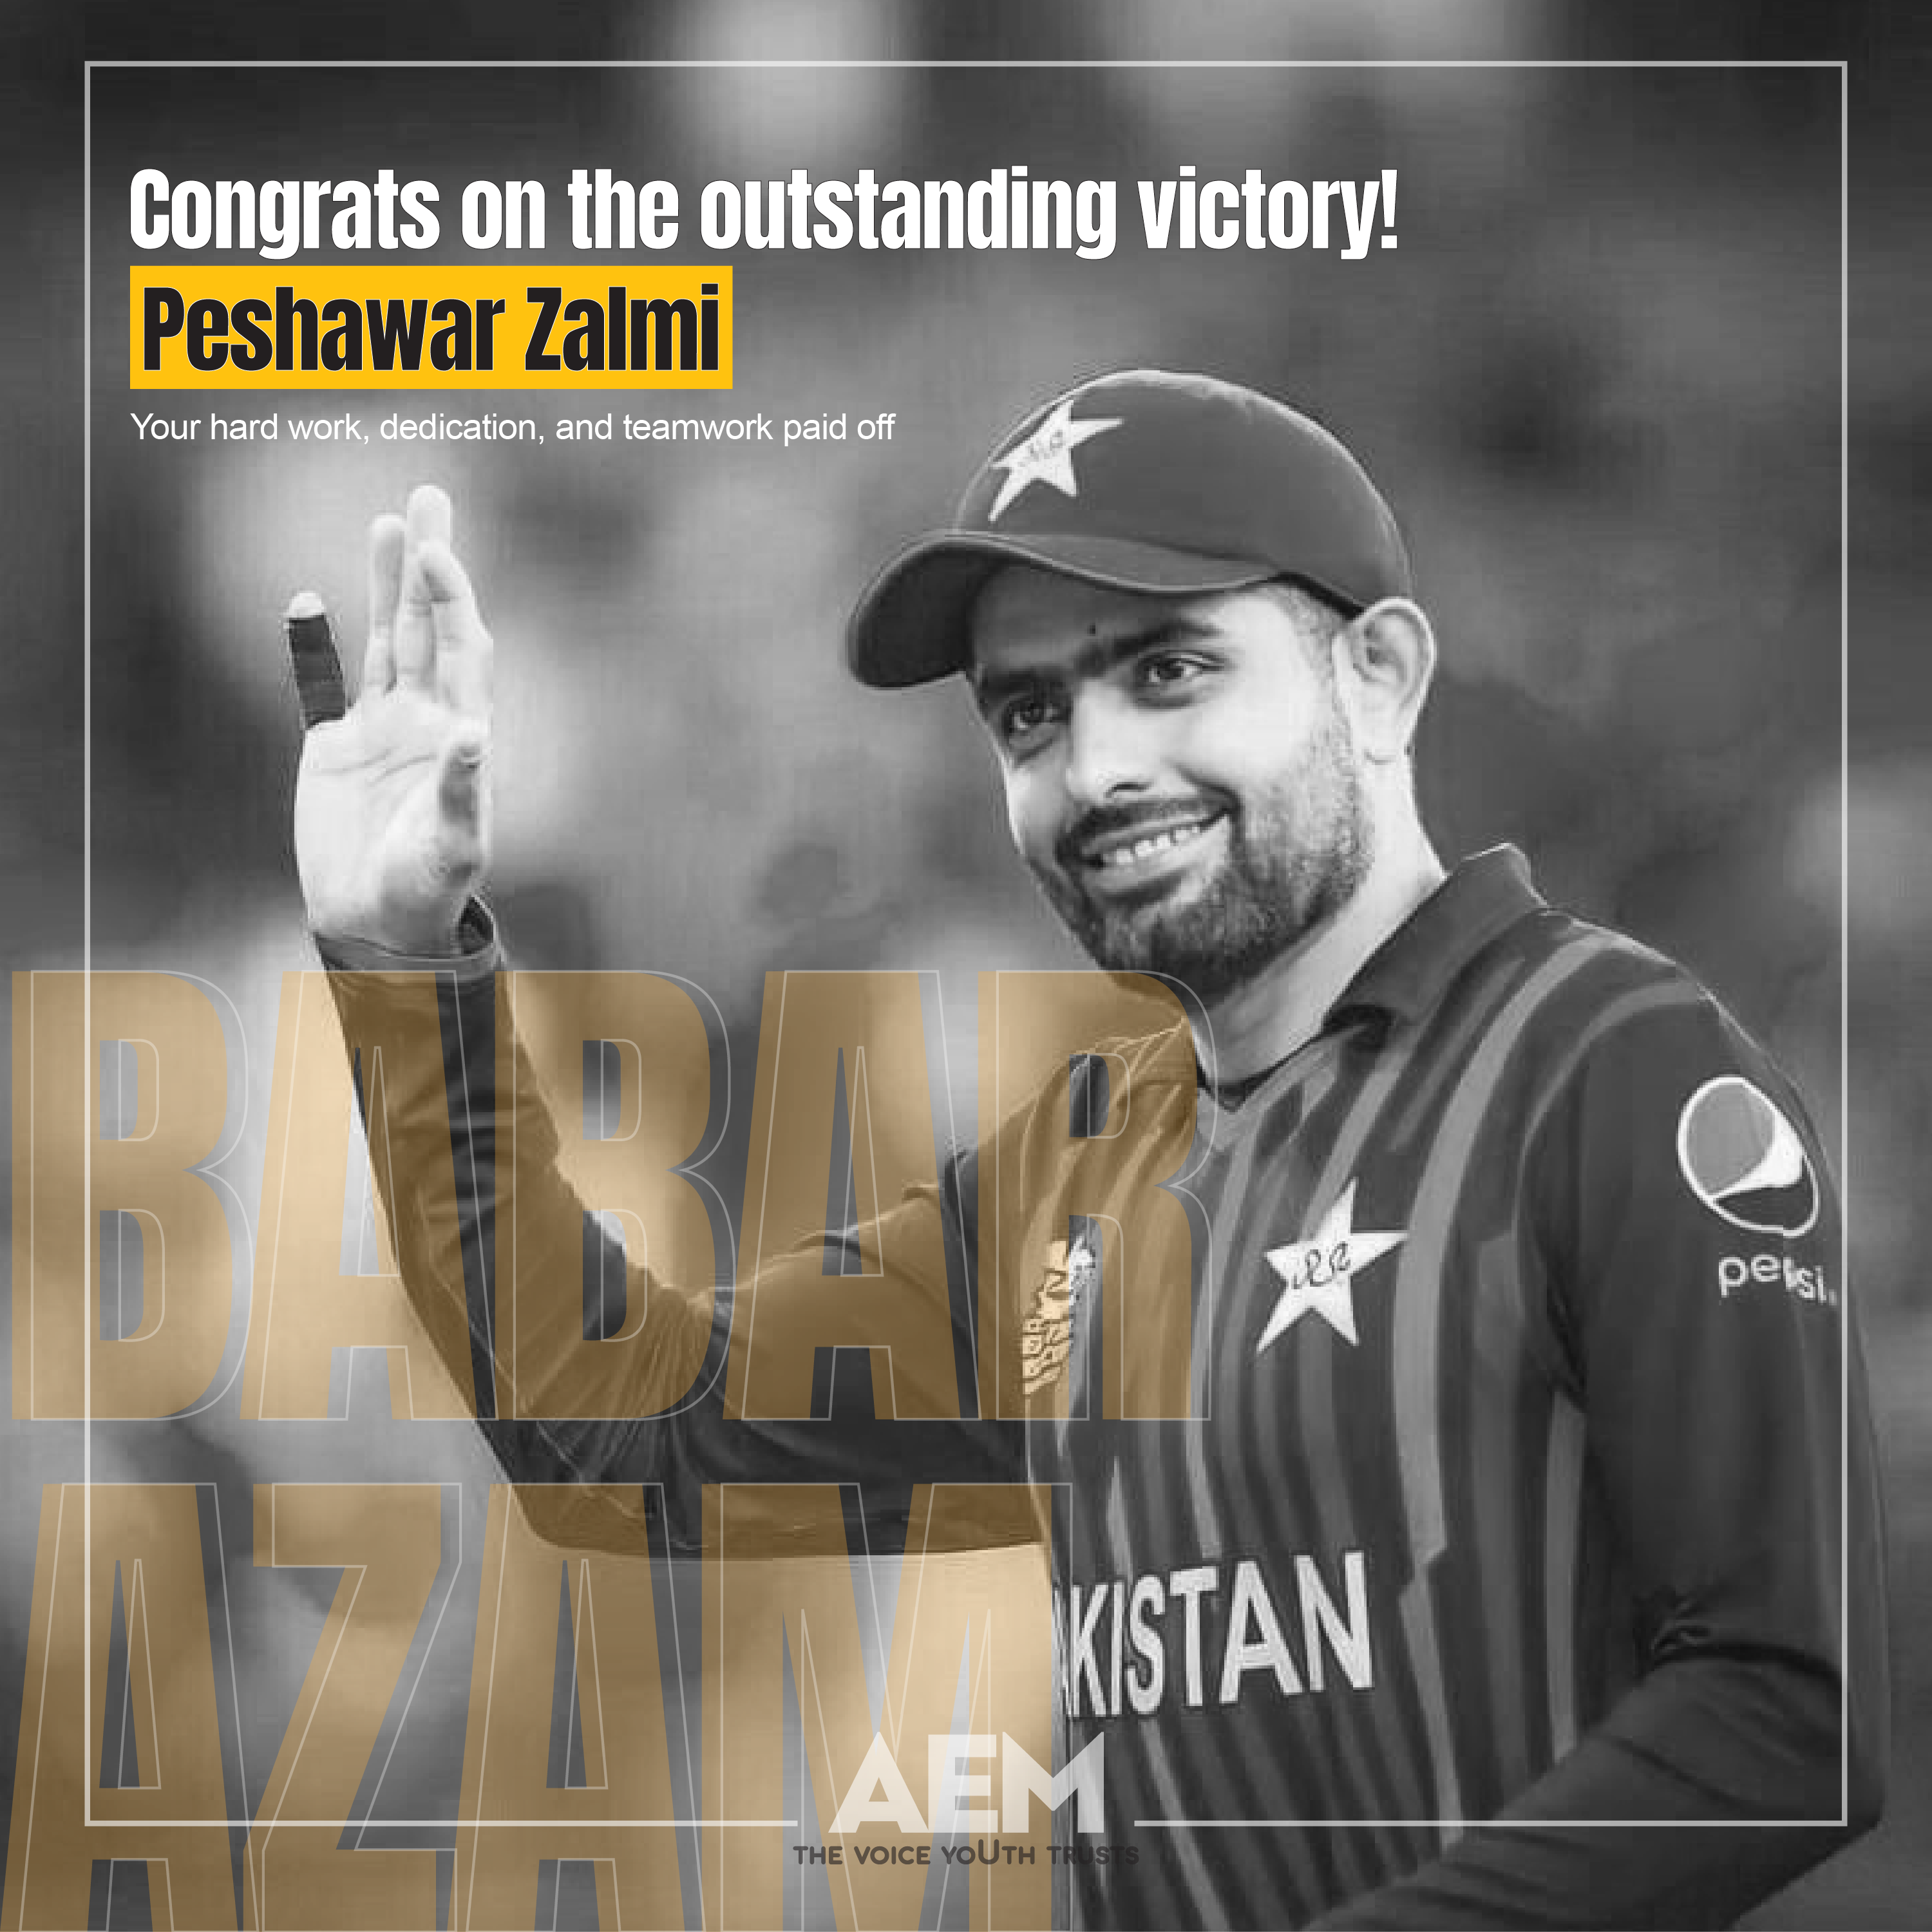 Congratulations to Peshawar Zalmi for their impressive Win Against Karachi Kings